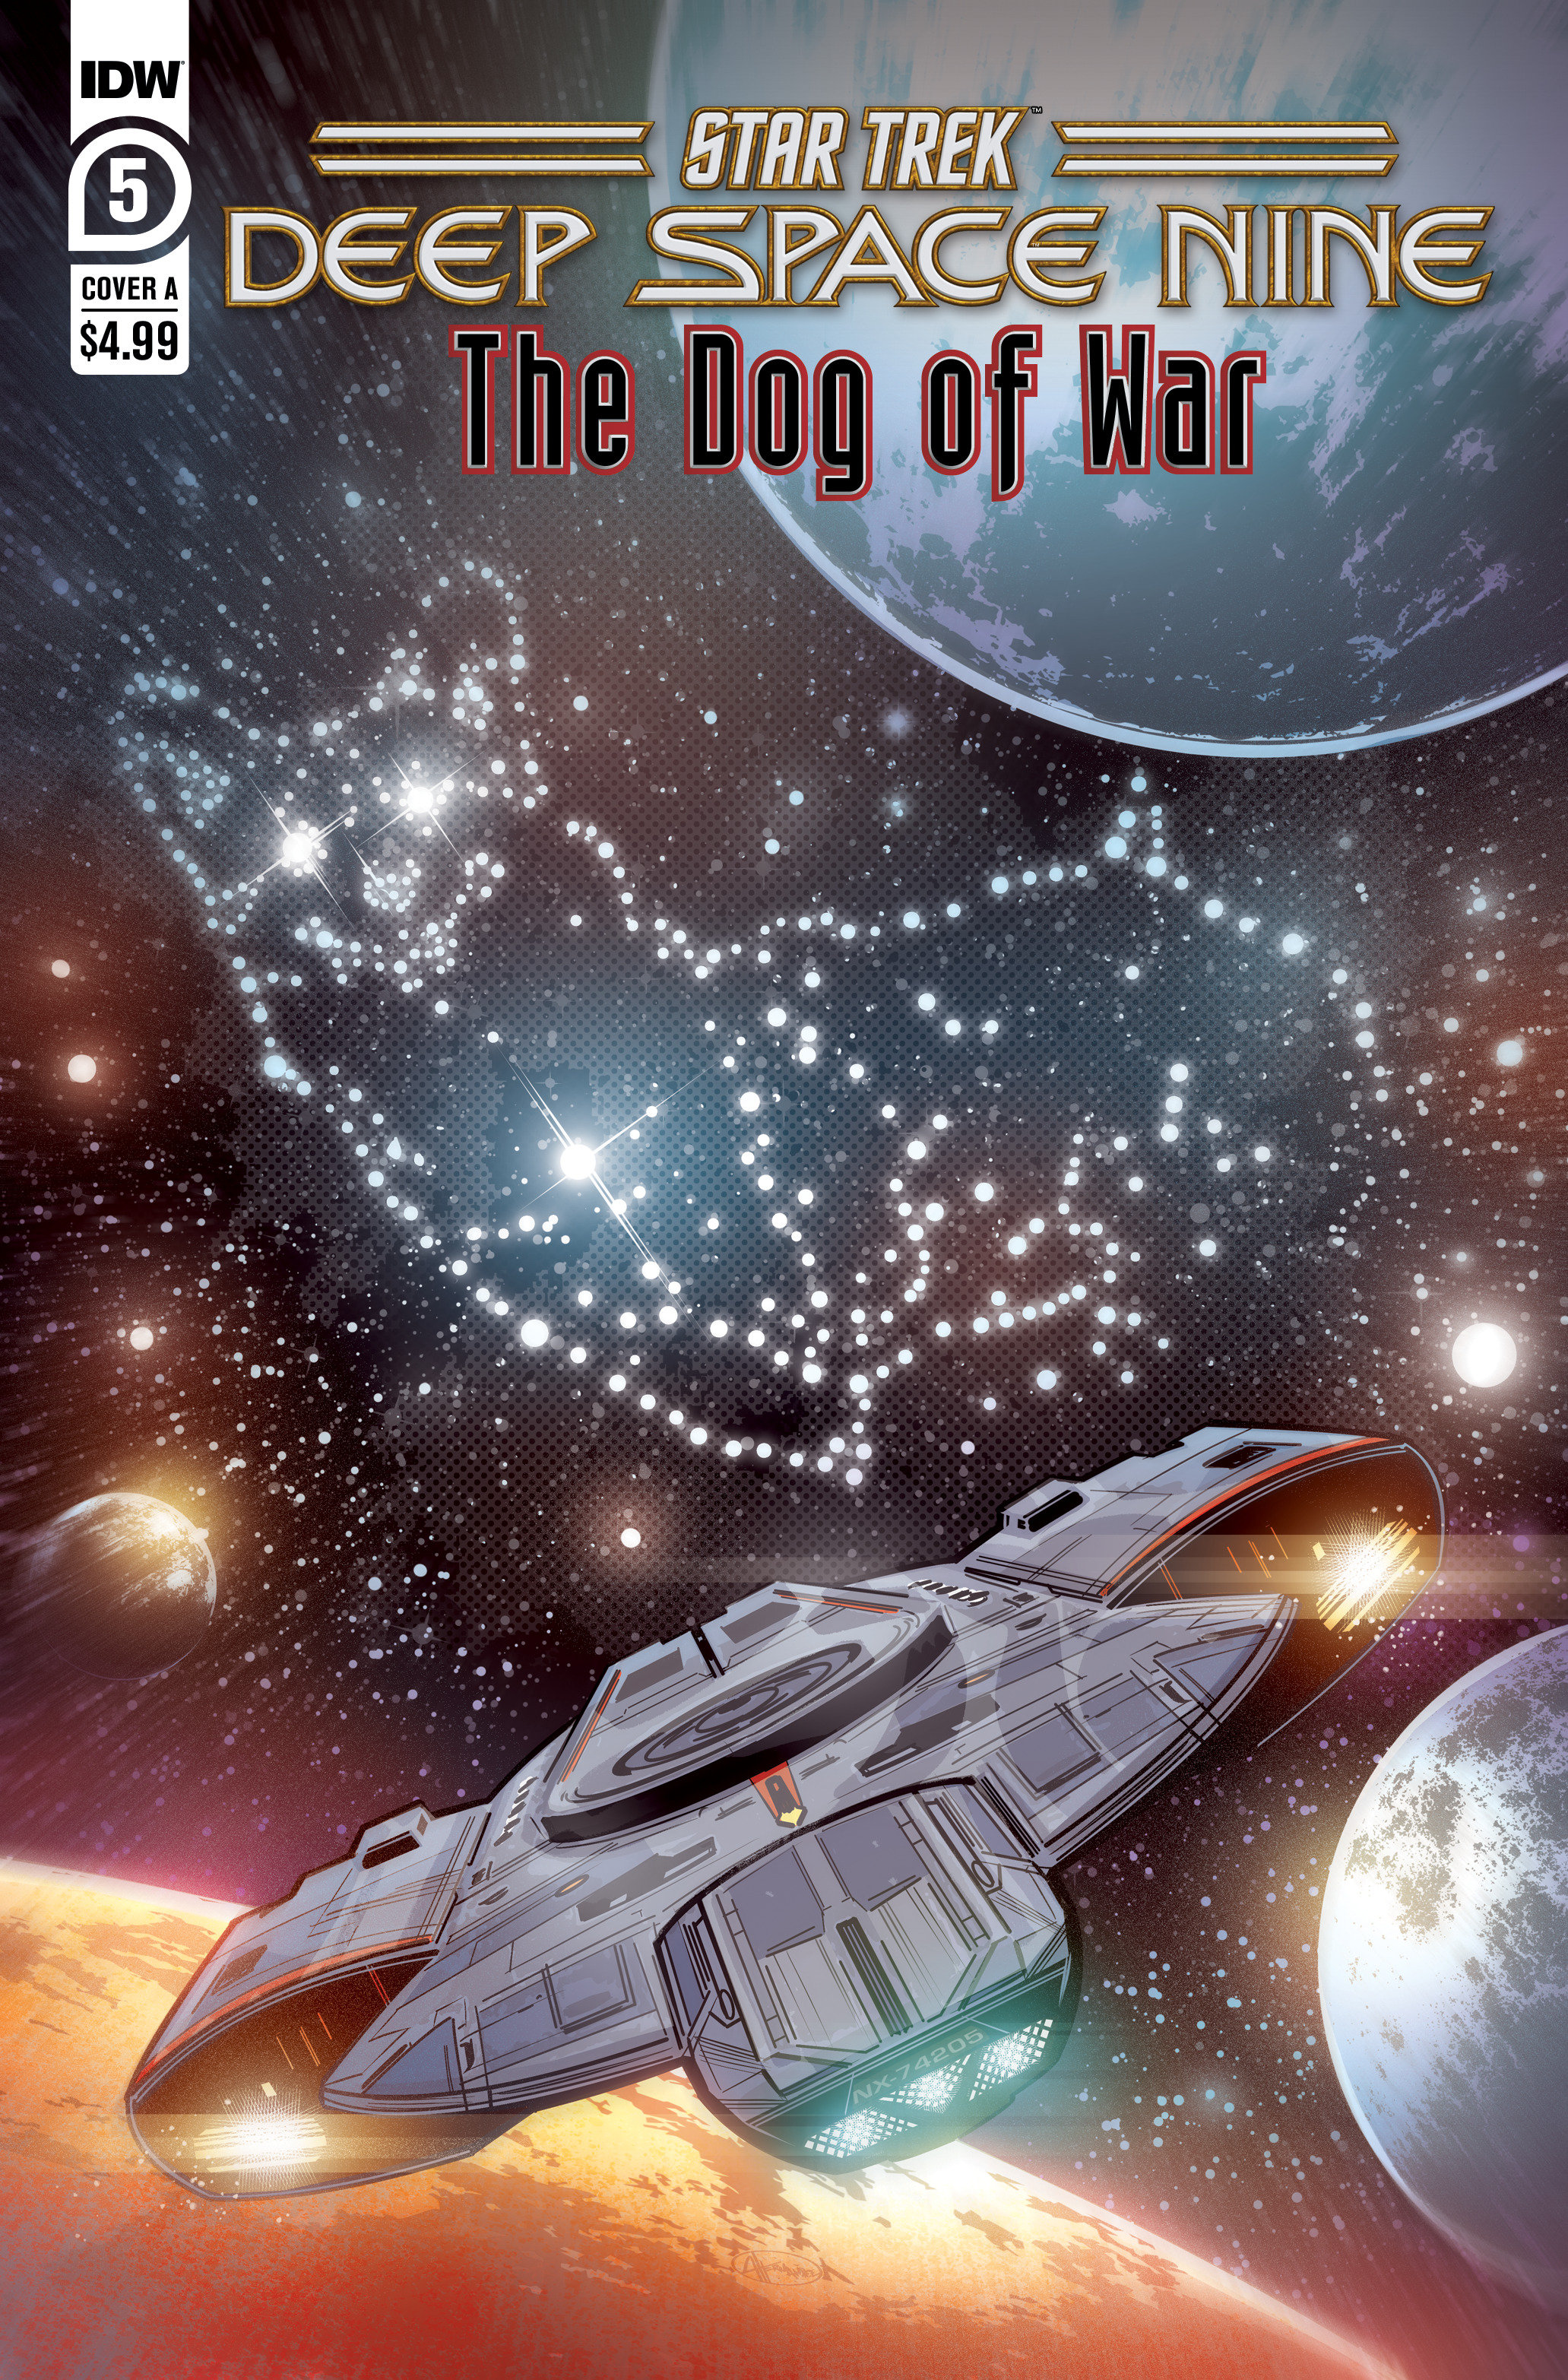 Star Trek Deep Space Nine The Dog of War #5 Cover A Hernandez